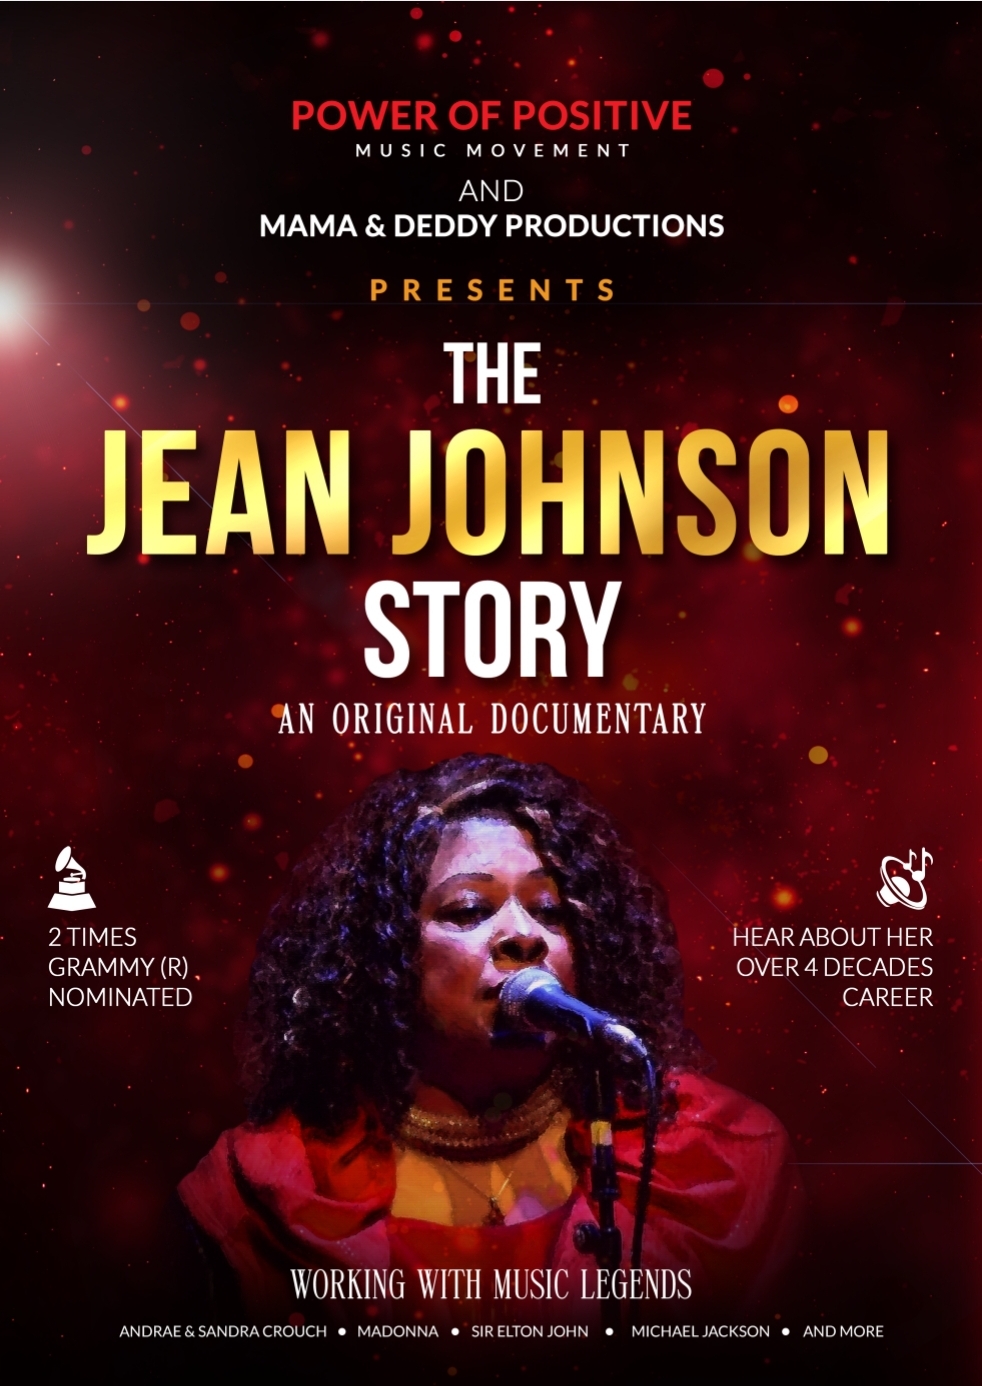 The Jean Johnson Story